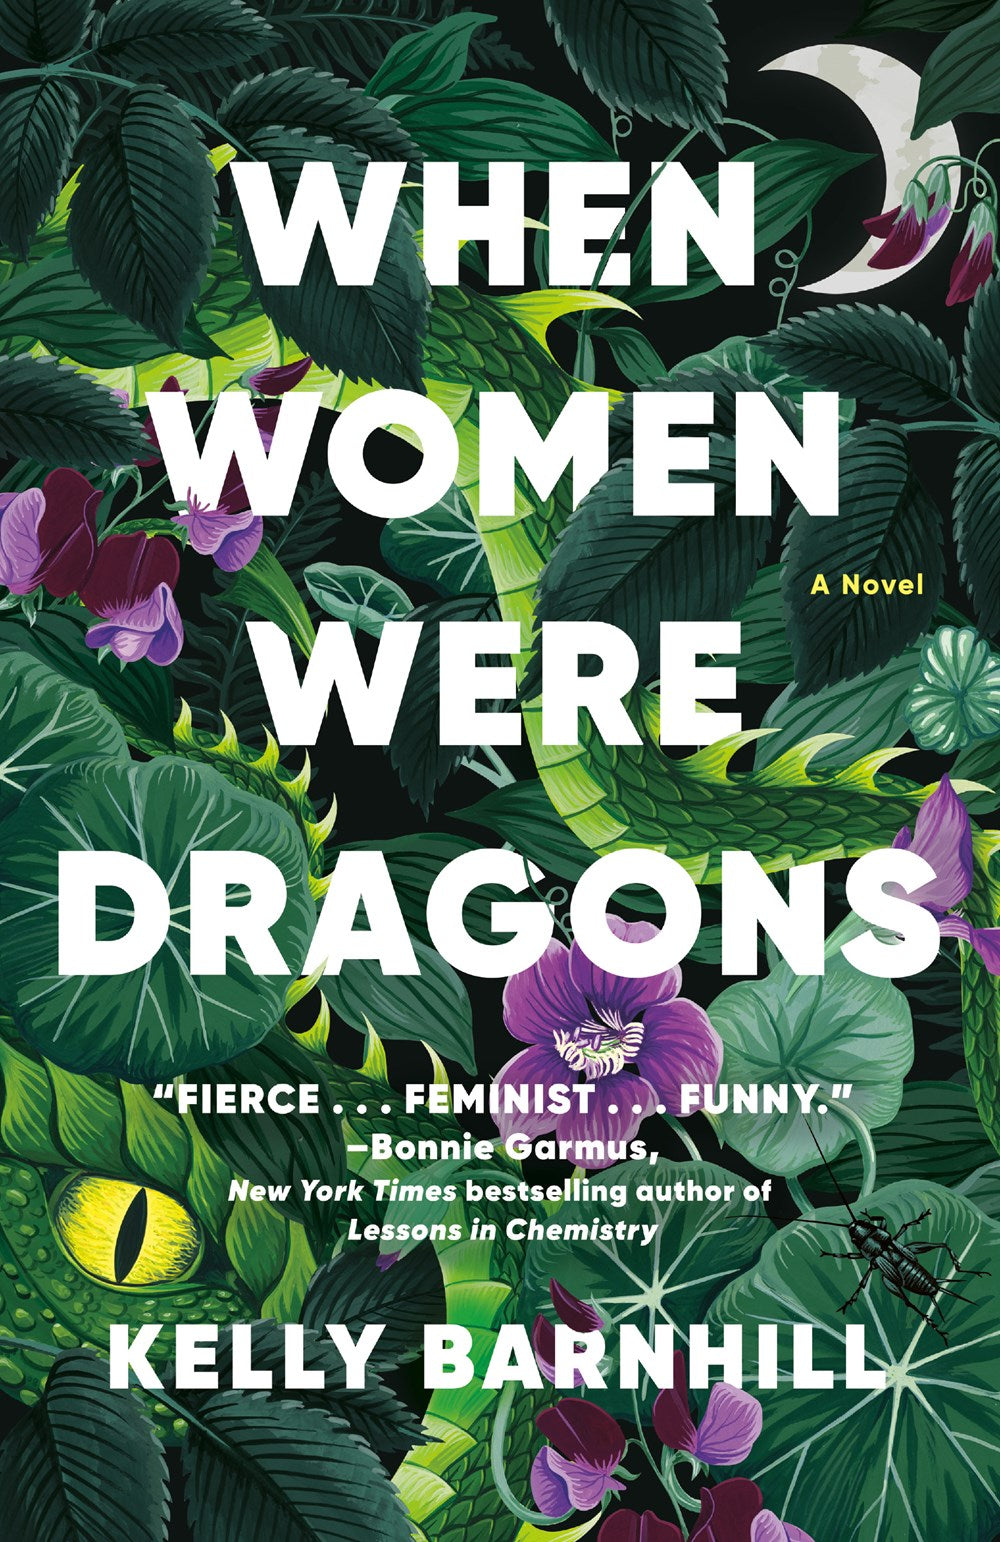 When Women Were Dragons: A Novel by Kelly Barnhill